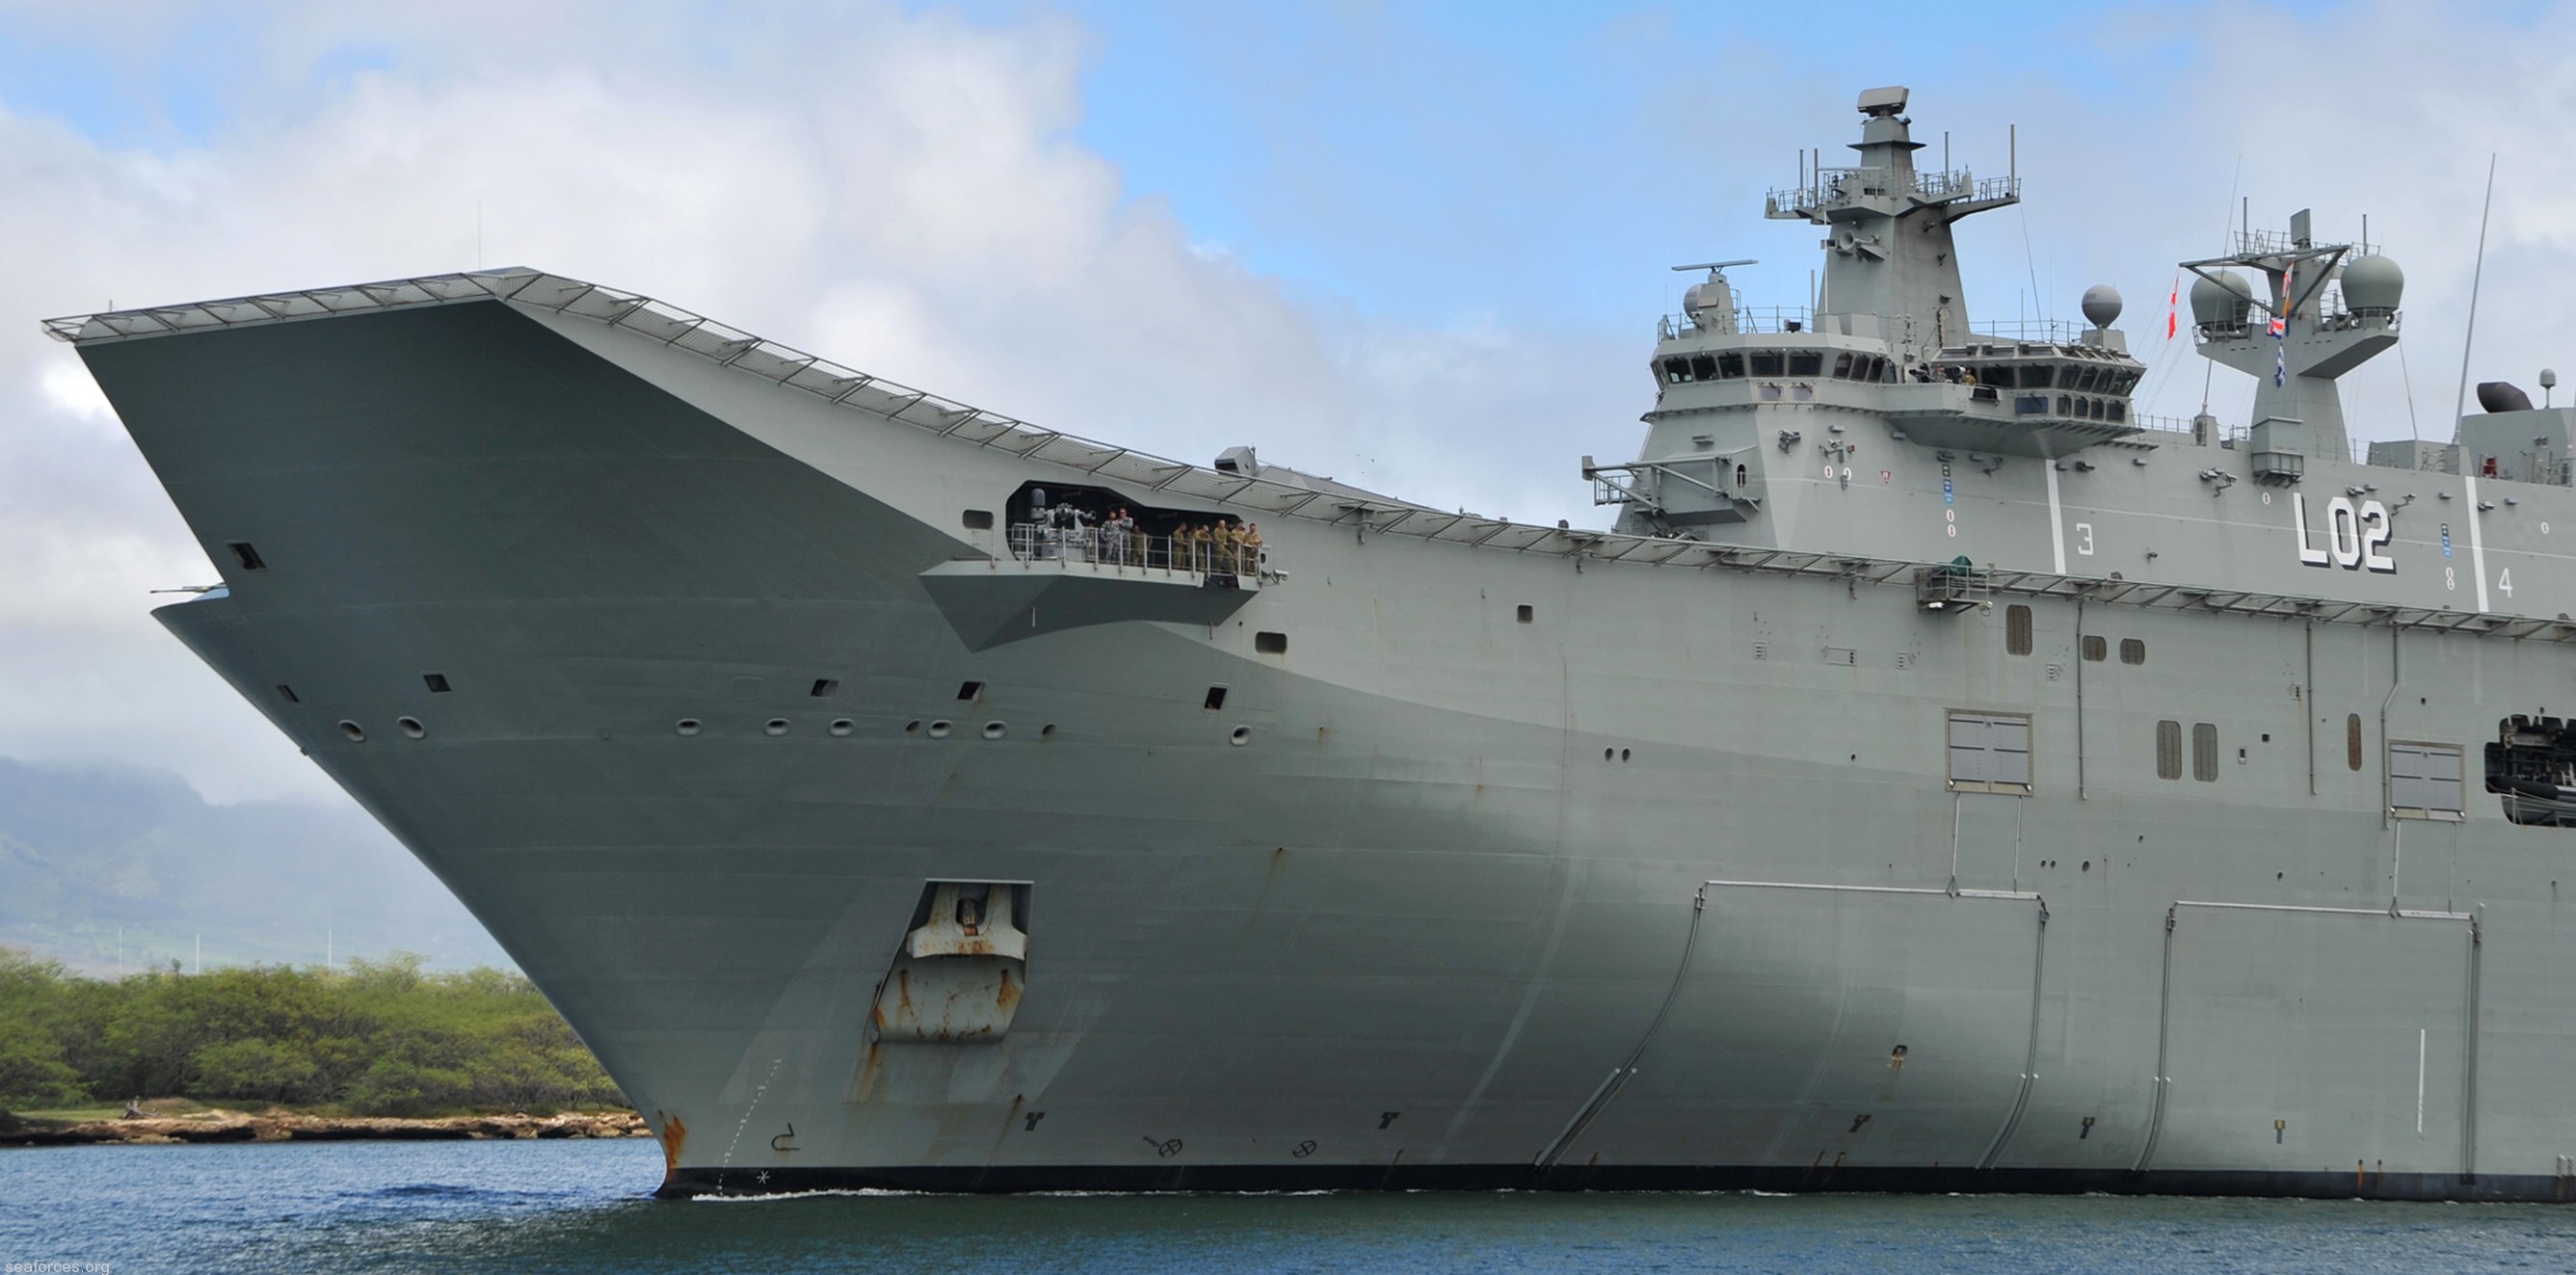 canberra class amphibious landing ship helicopter dock lhd royal australian navy 18 25mm typhoon gun system